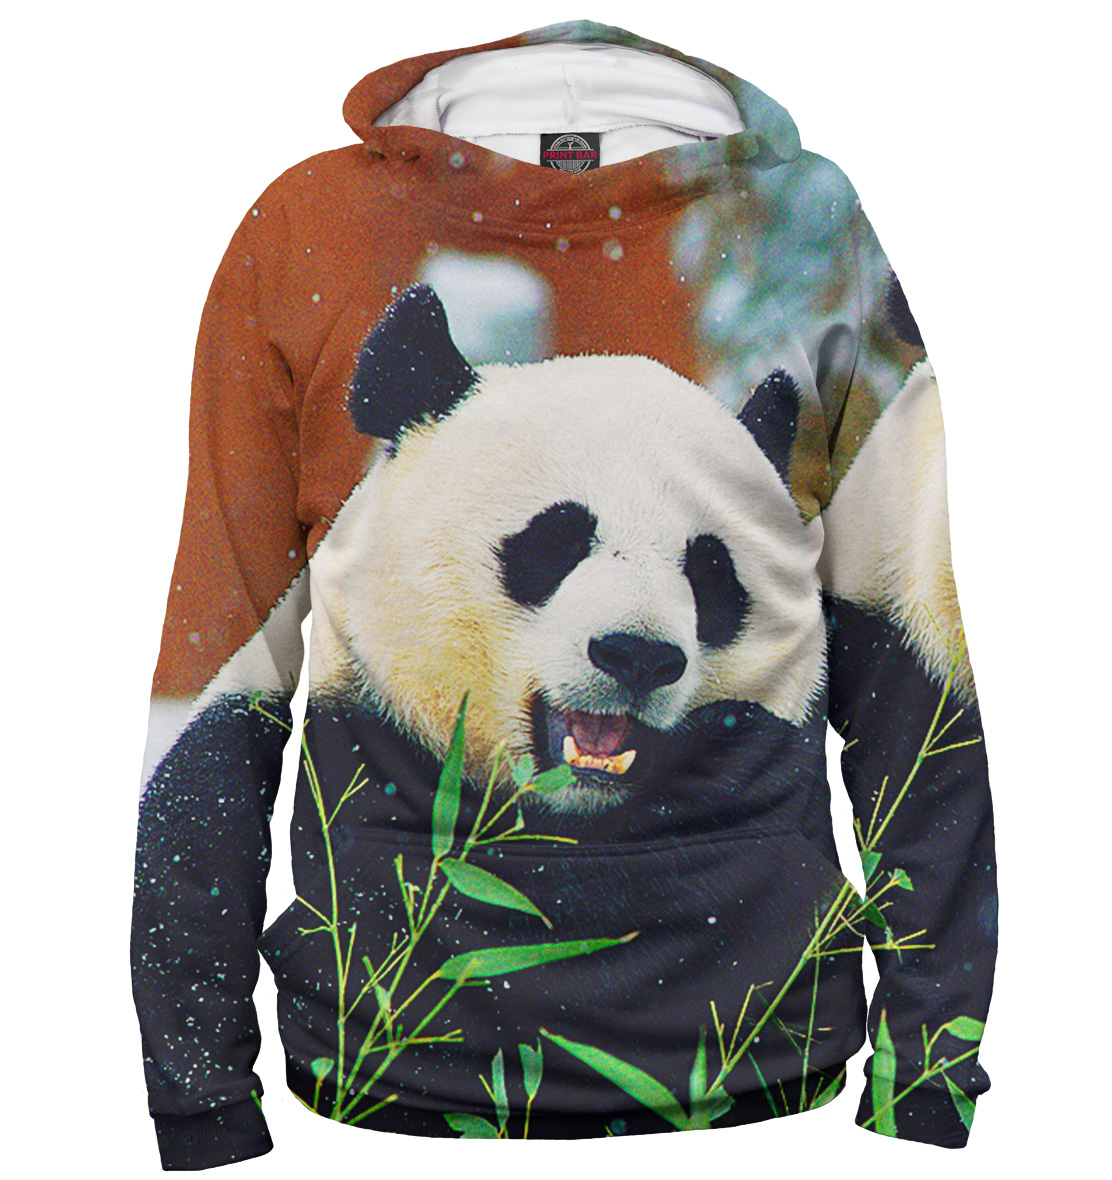 Buy panda. Худи с пандами. Кофта с пандами. Куртка с пандами. Толстовка с принтом Панда.